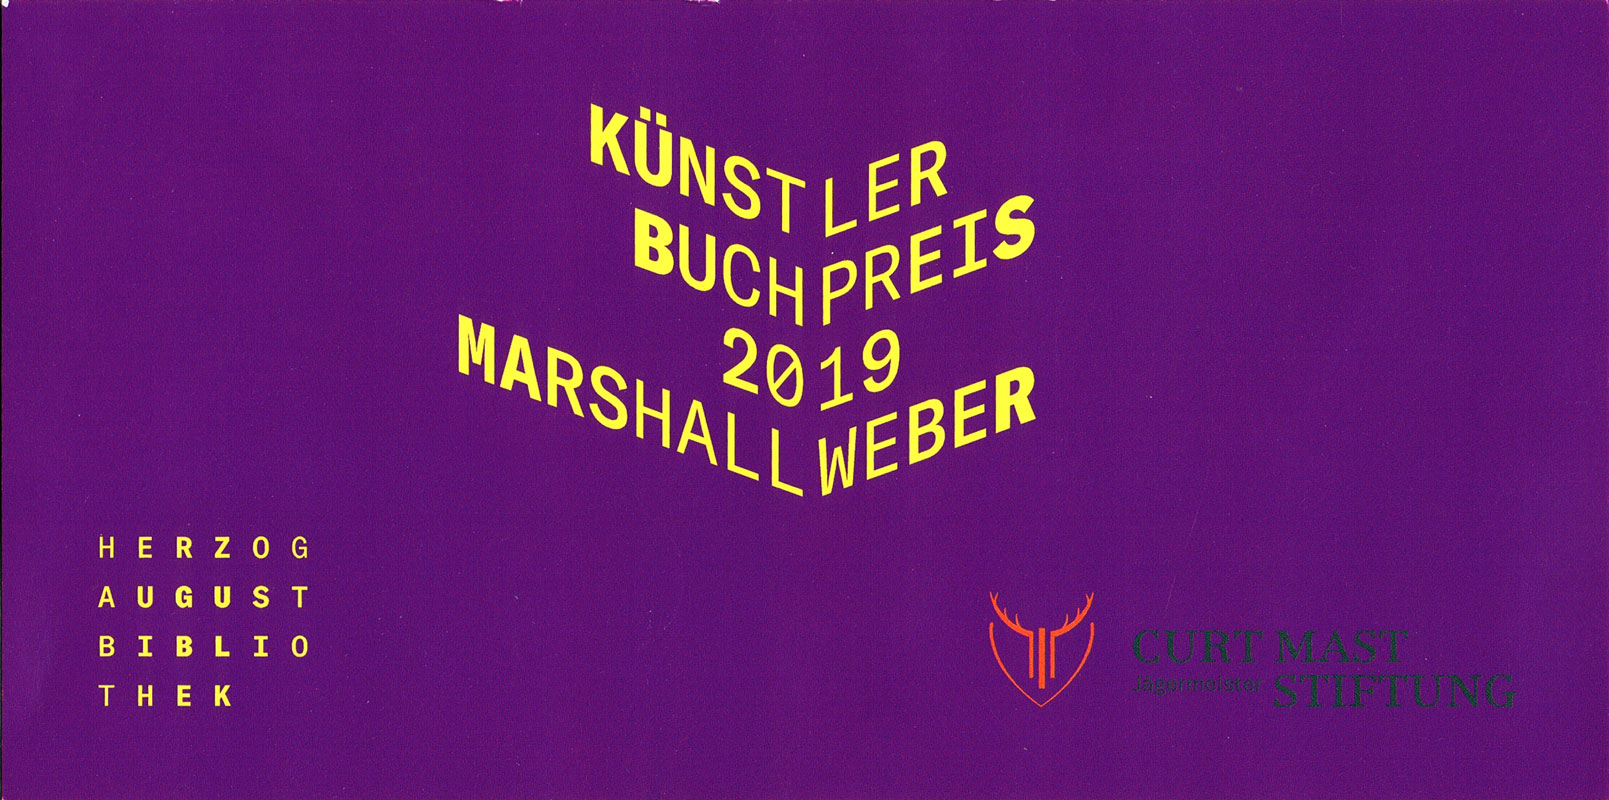 weber-kuemstlerbuchpreis-2019-pk